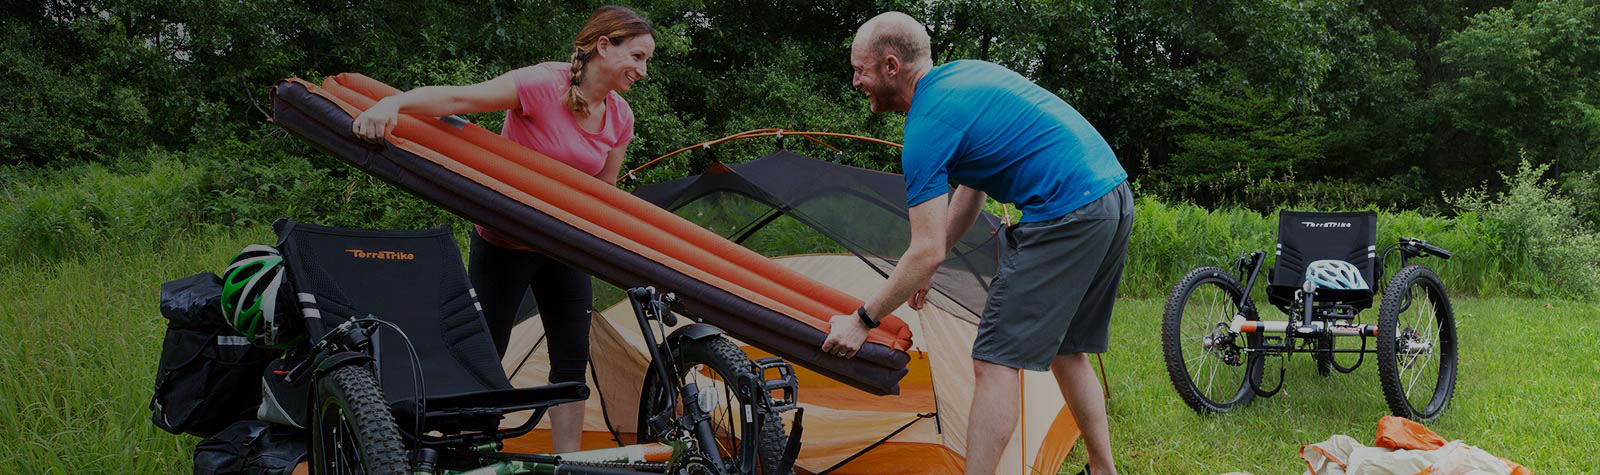 Couple settin up tent bike packing on terra trike recumbents